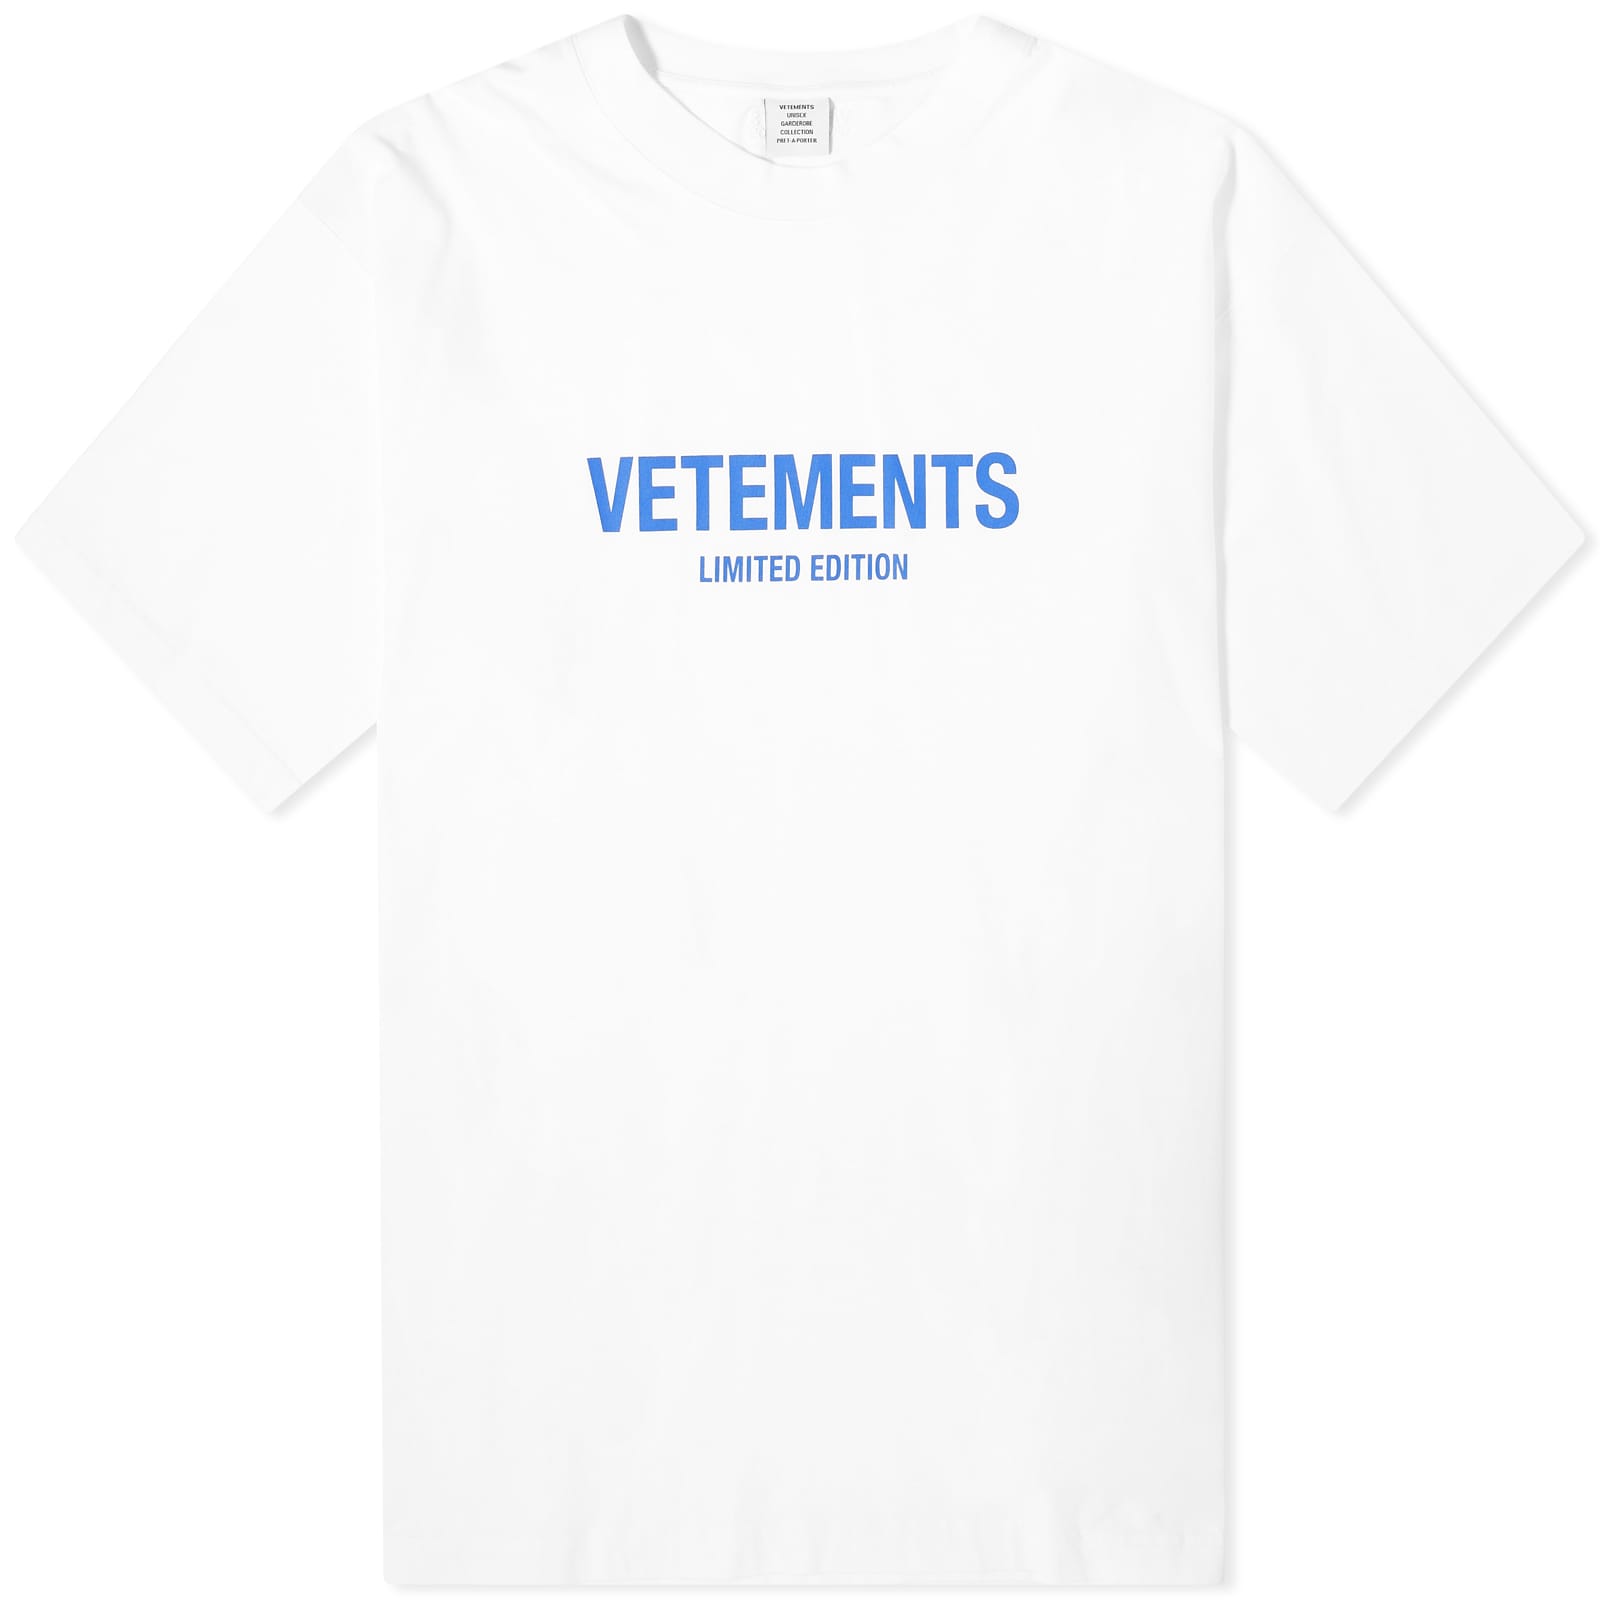 2021ss vetements limited edition tee men women high quality vetements t shirt vtm tops Футболка Vetements Limited Edition Logo, белый и синий